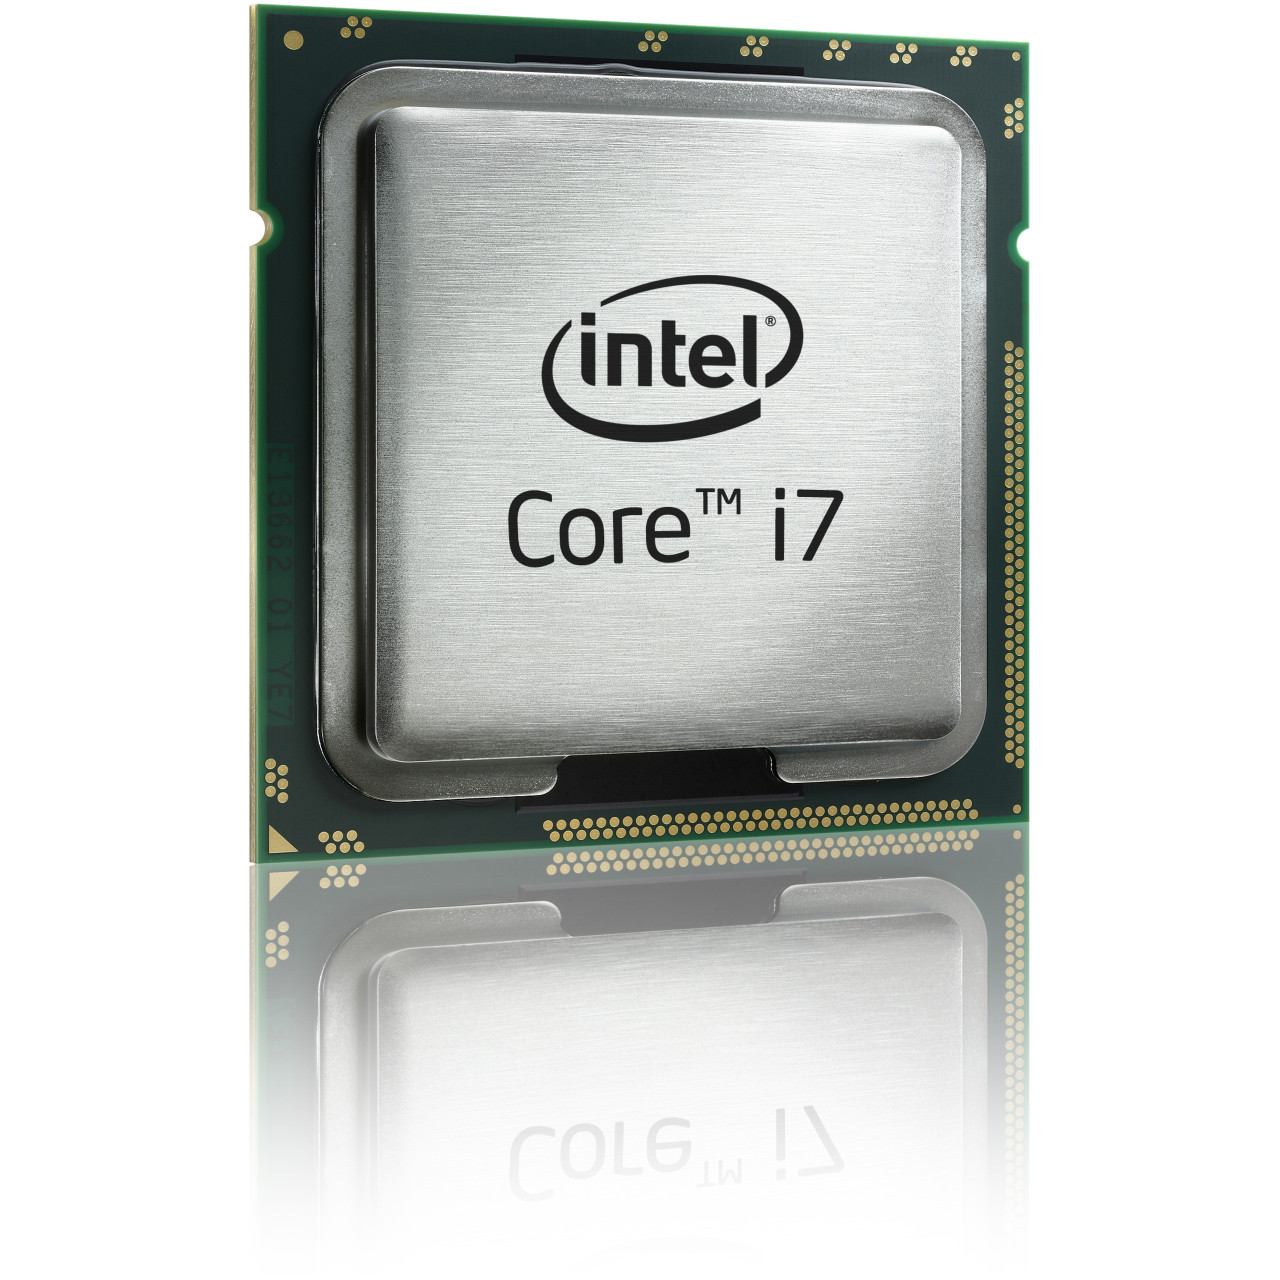 Intel Core i7 i7-3900 i7-3930K Hexa-core (6 Core) 3.20 GHz Processor - OEM Pack - CM8061901100802